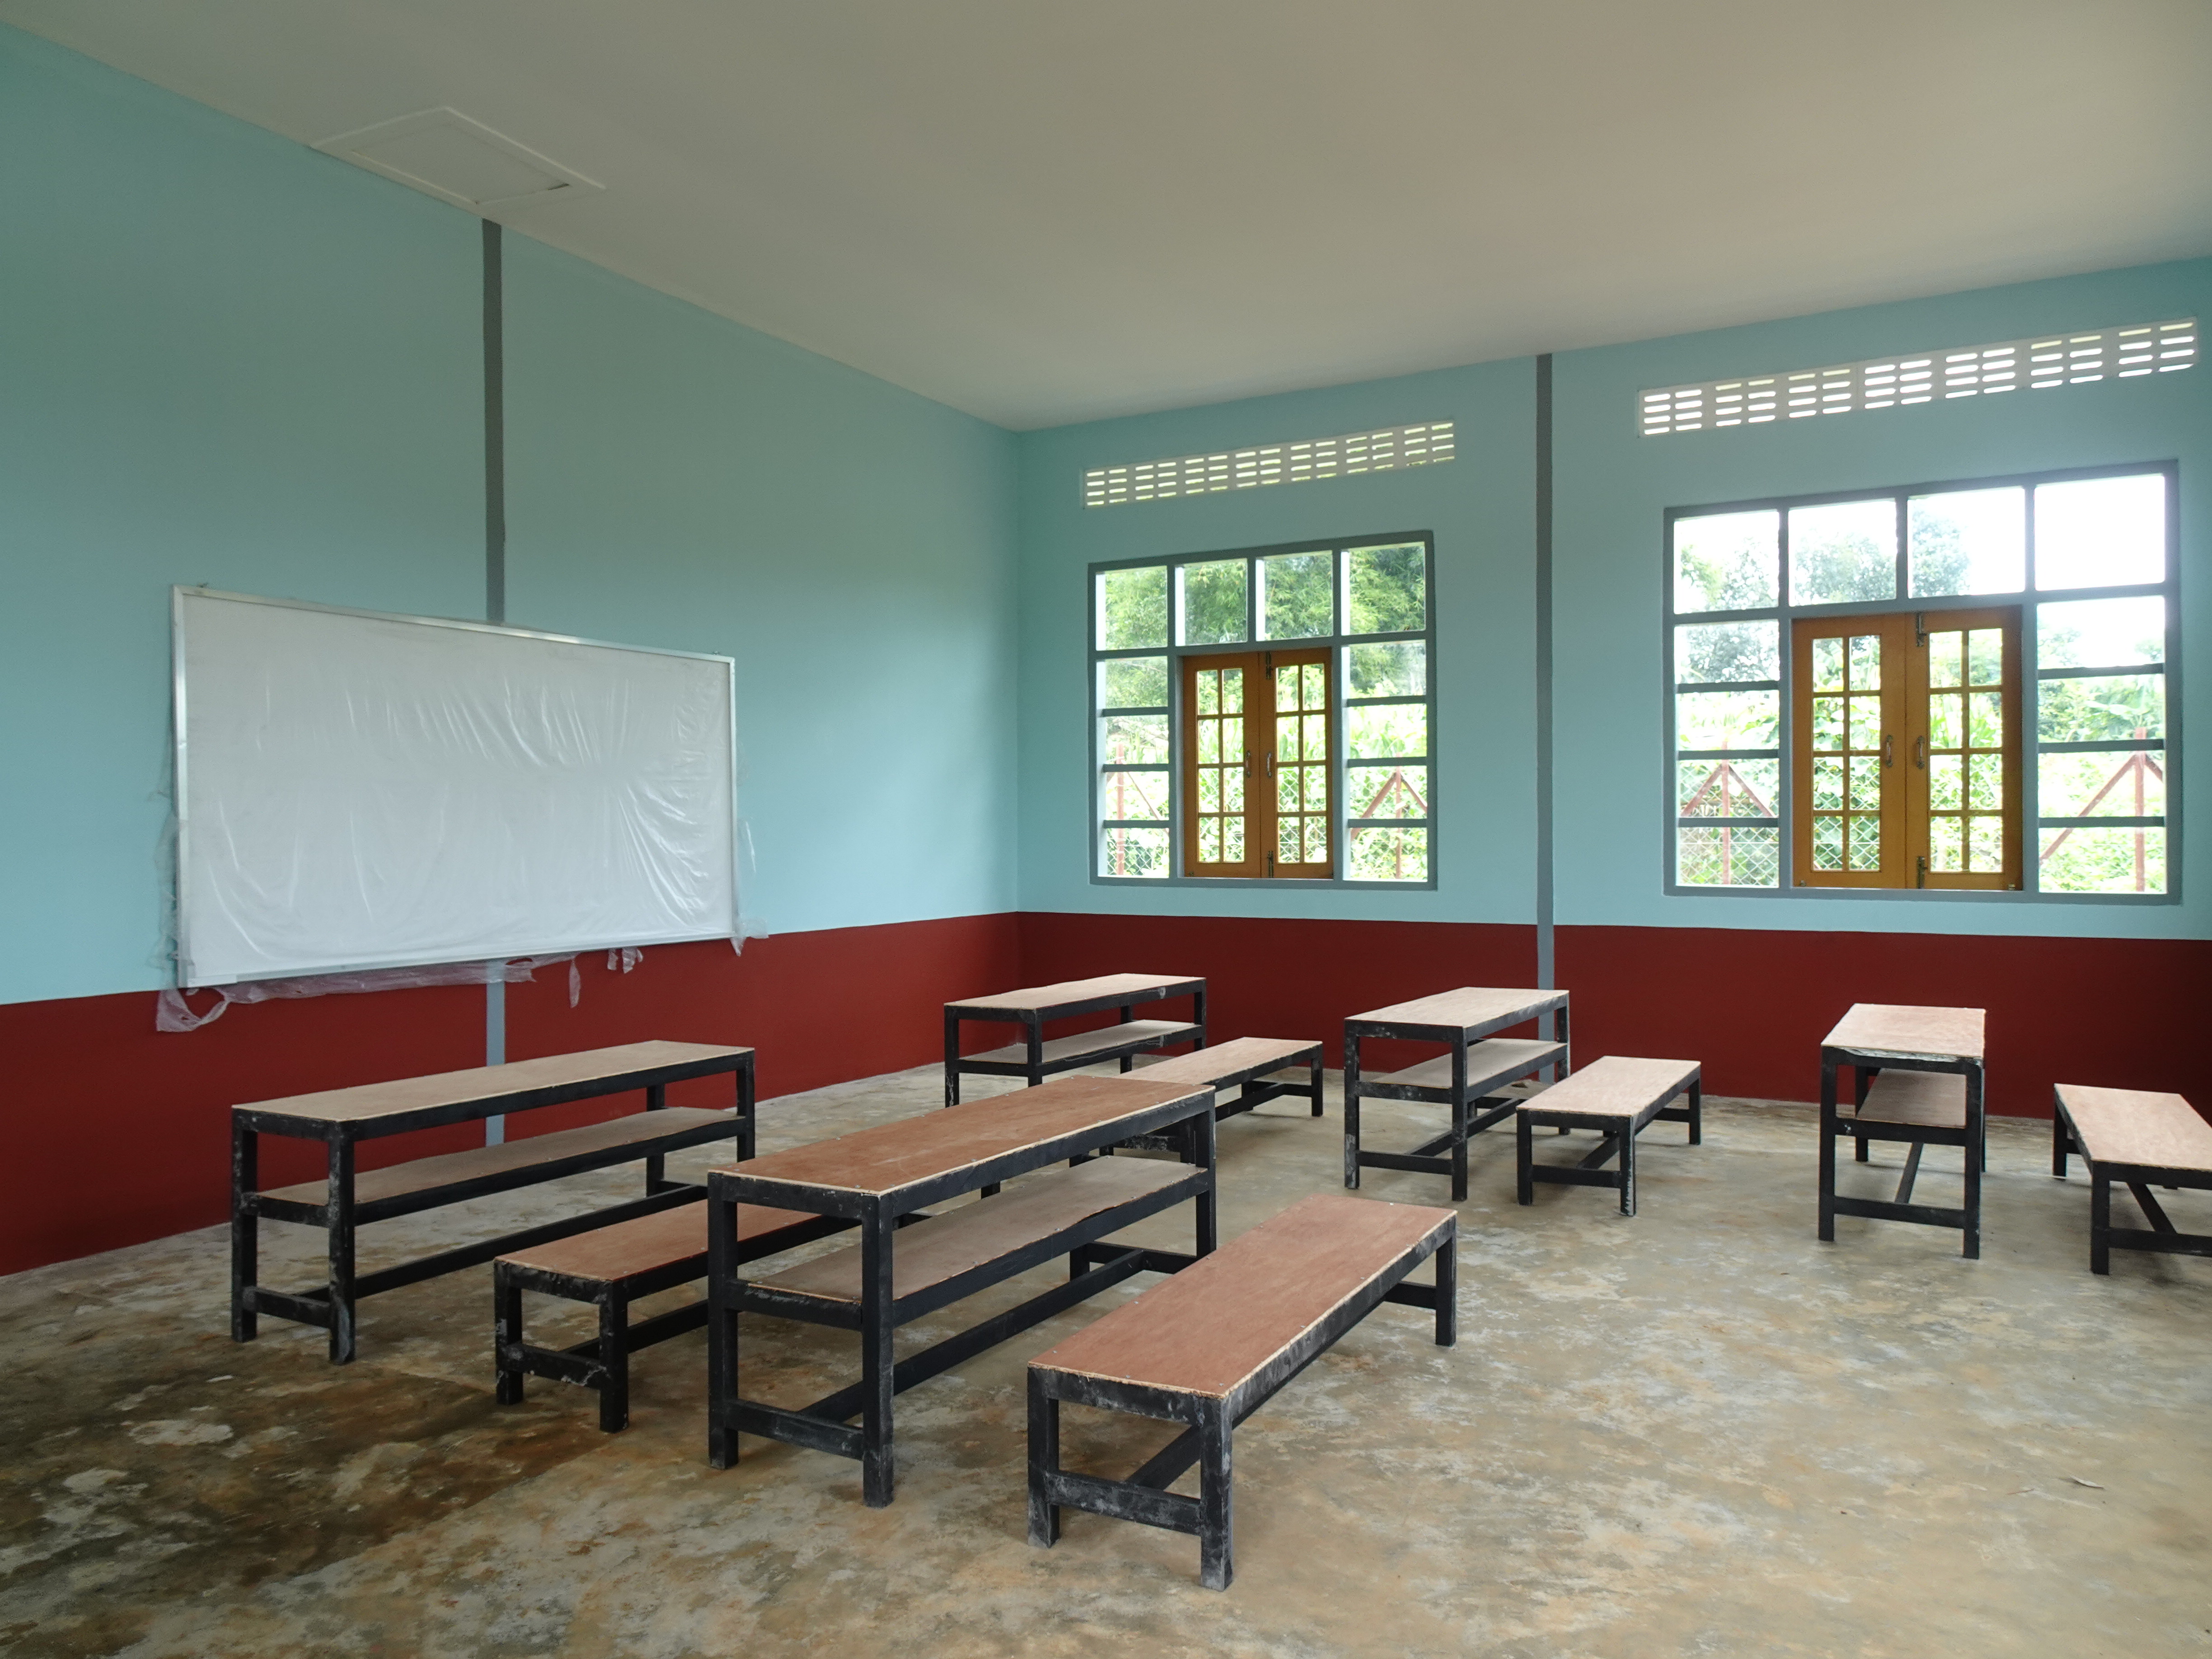 Newly furnished classroom 